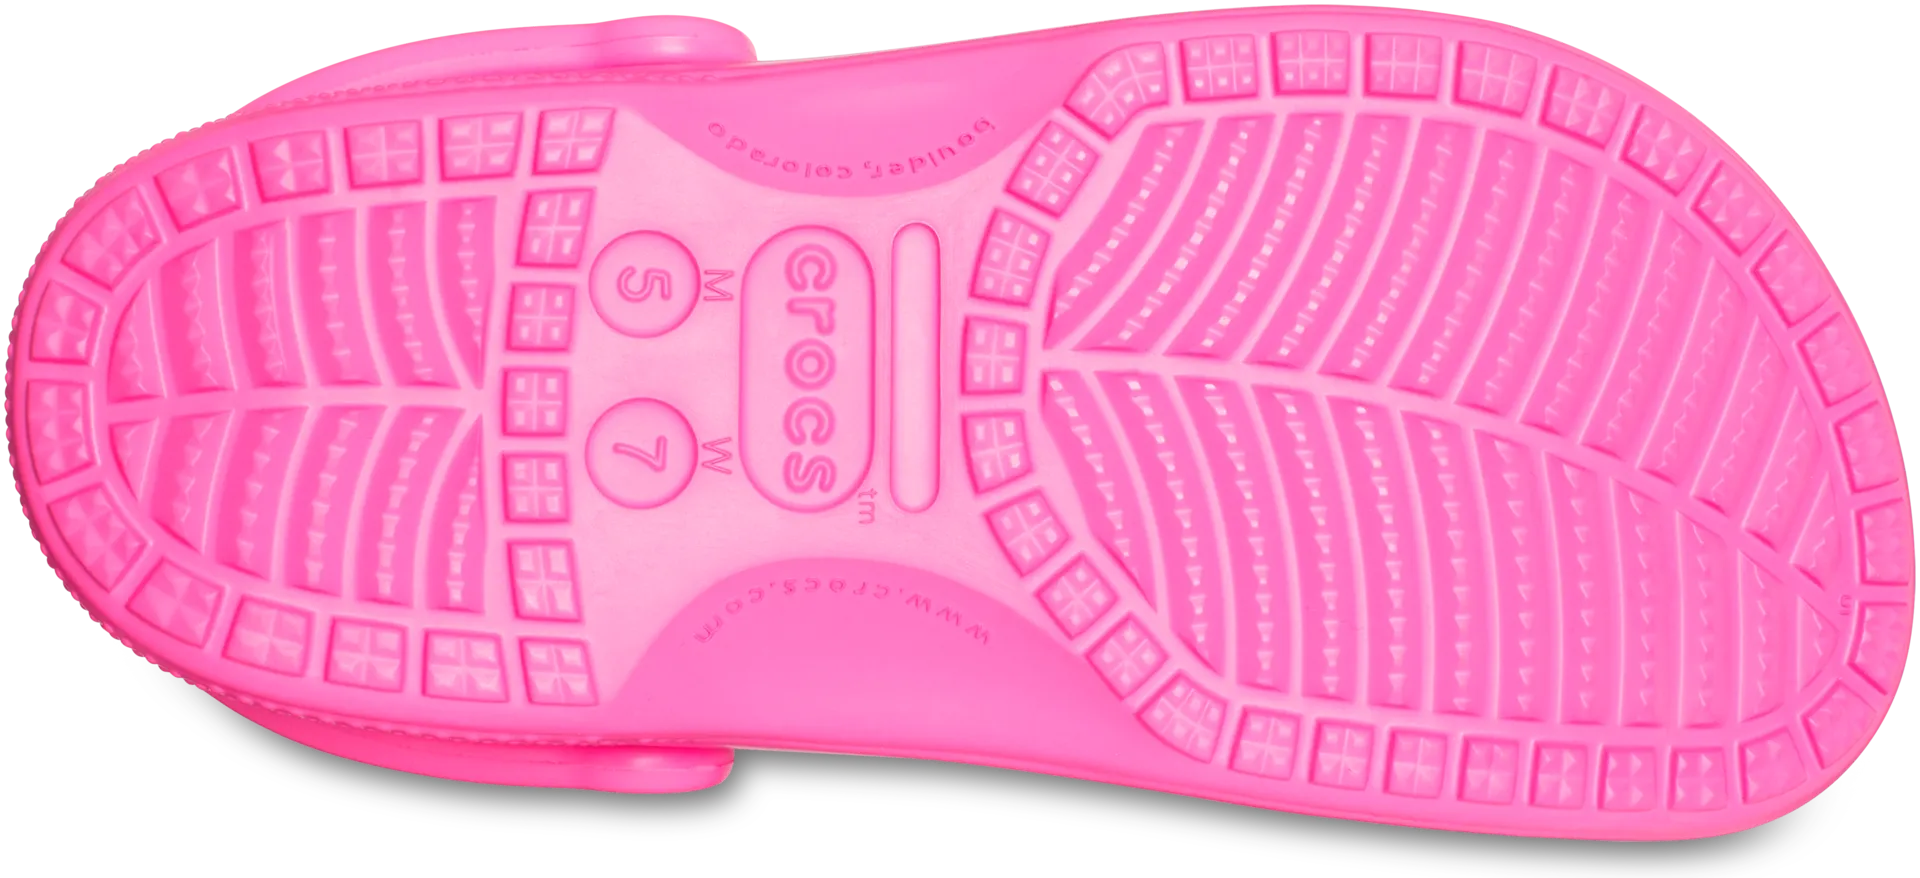 Crocs Baya naisten pistokas - Electric pink - 6